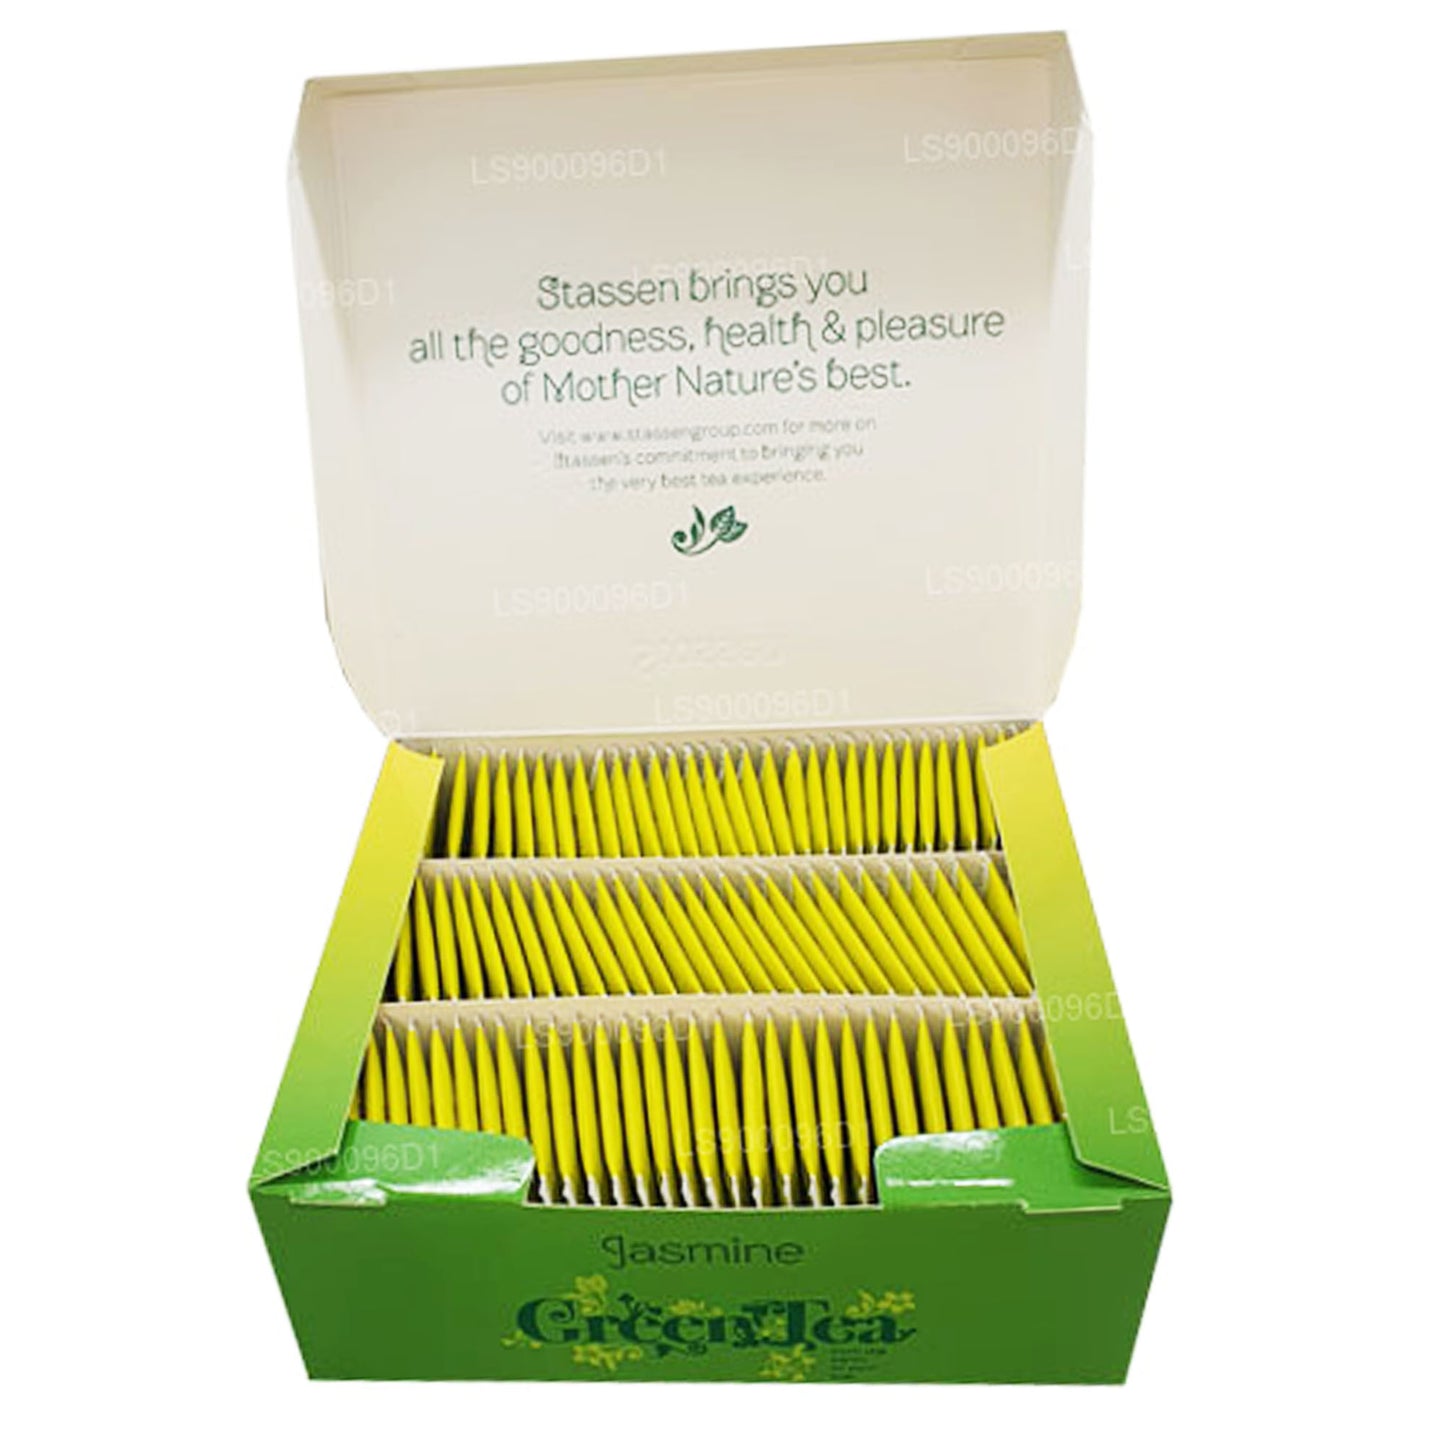 Stassen Jasmine Green Tea (150g) 100 Tea Bags